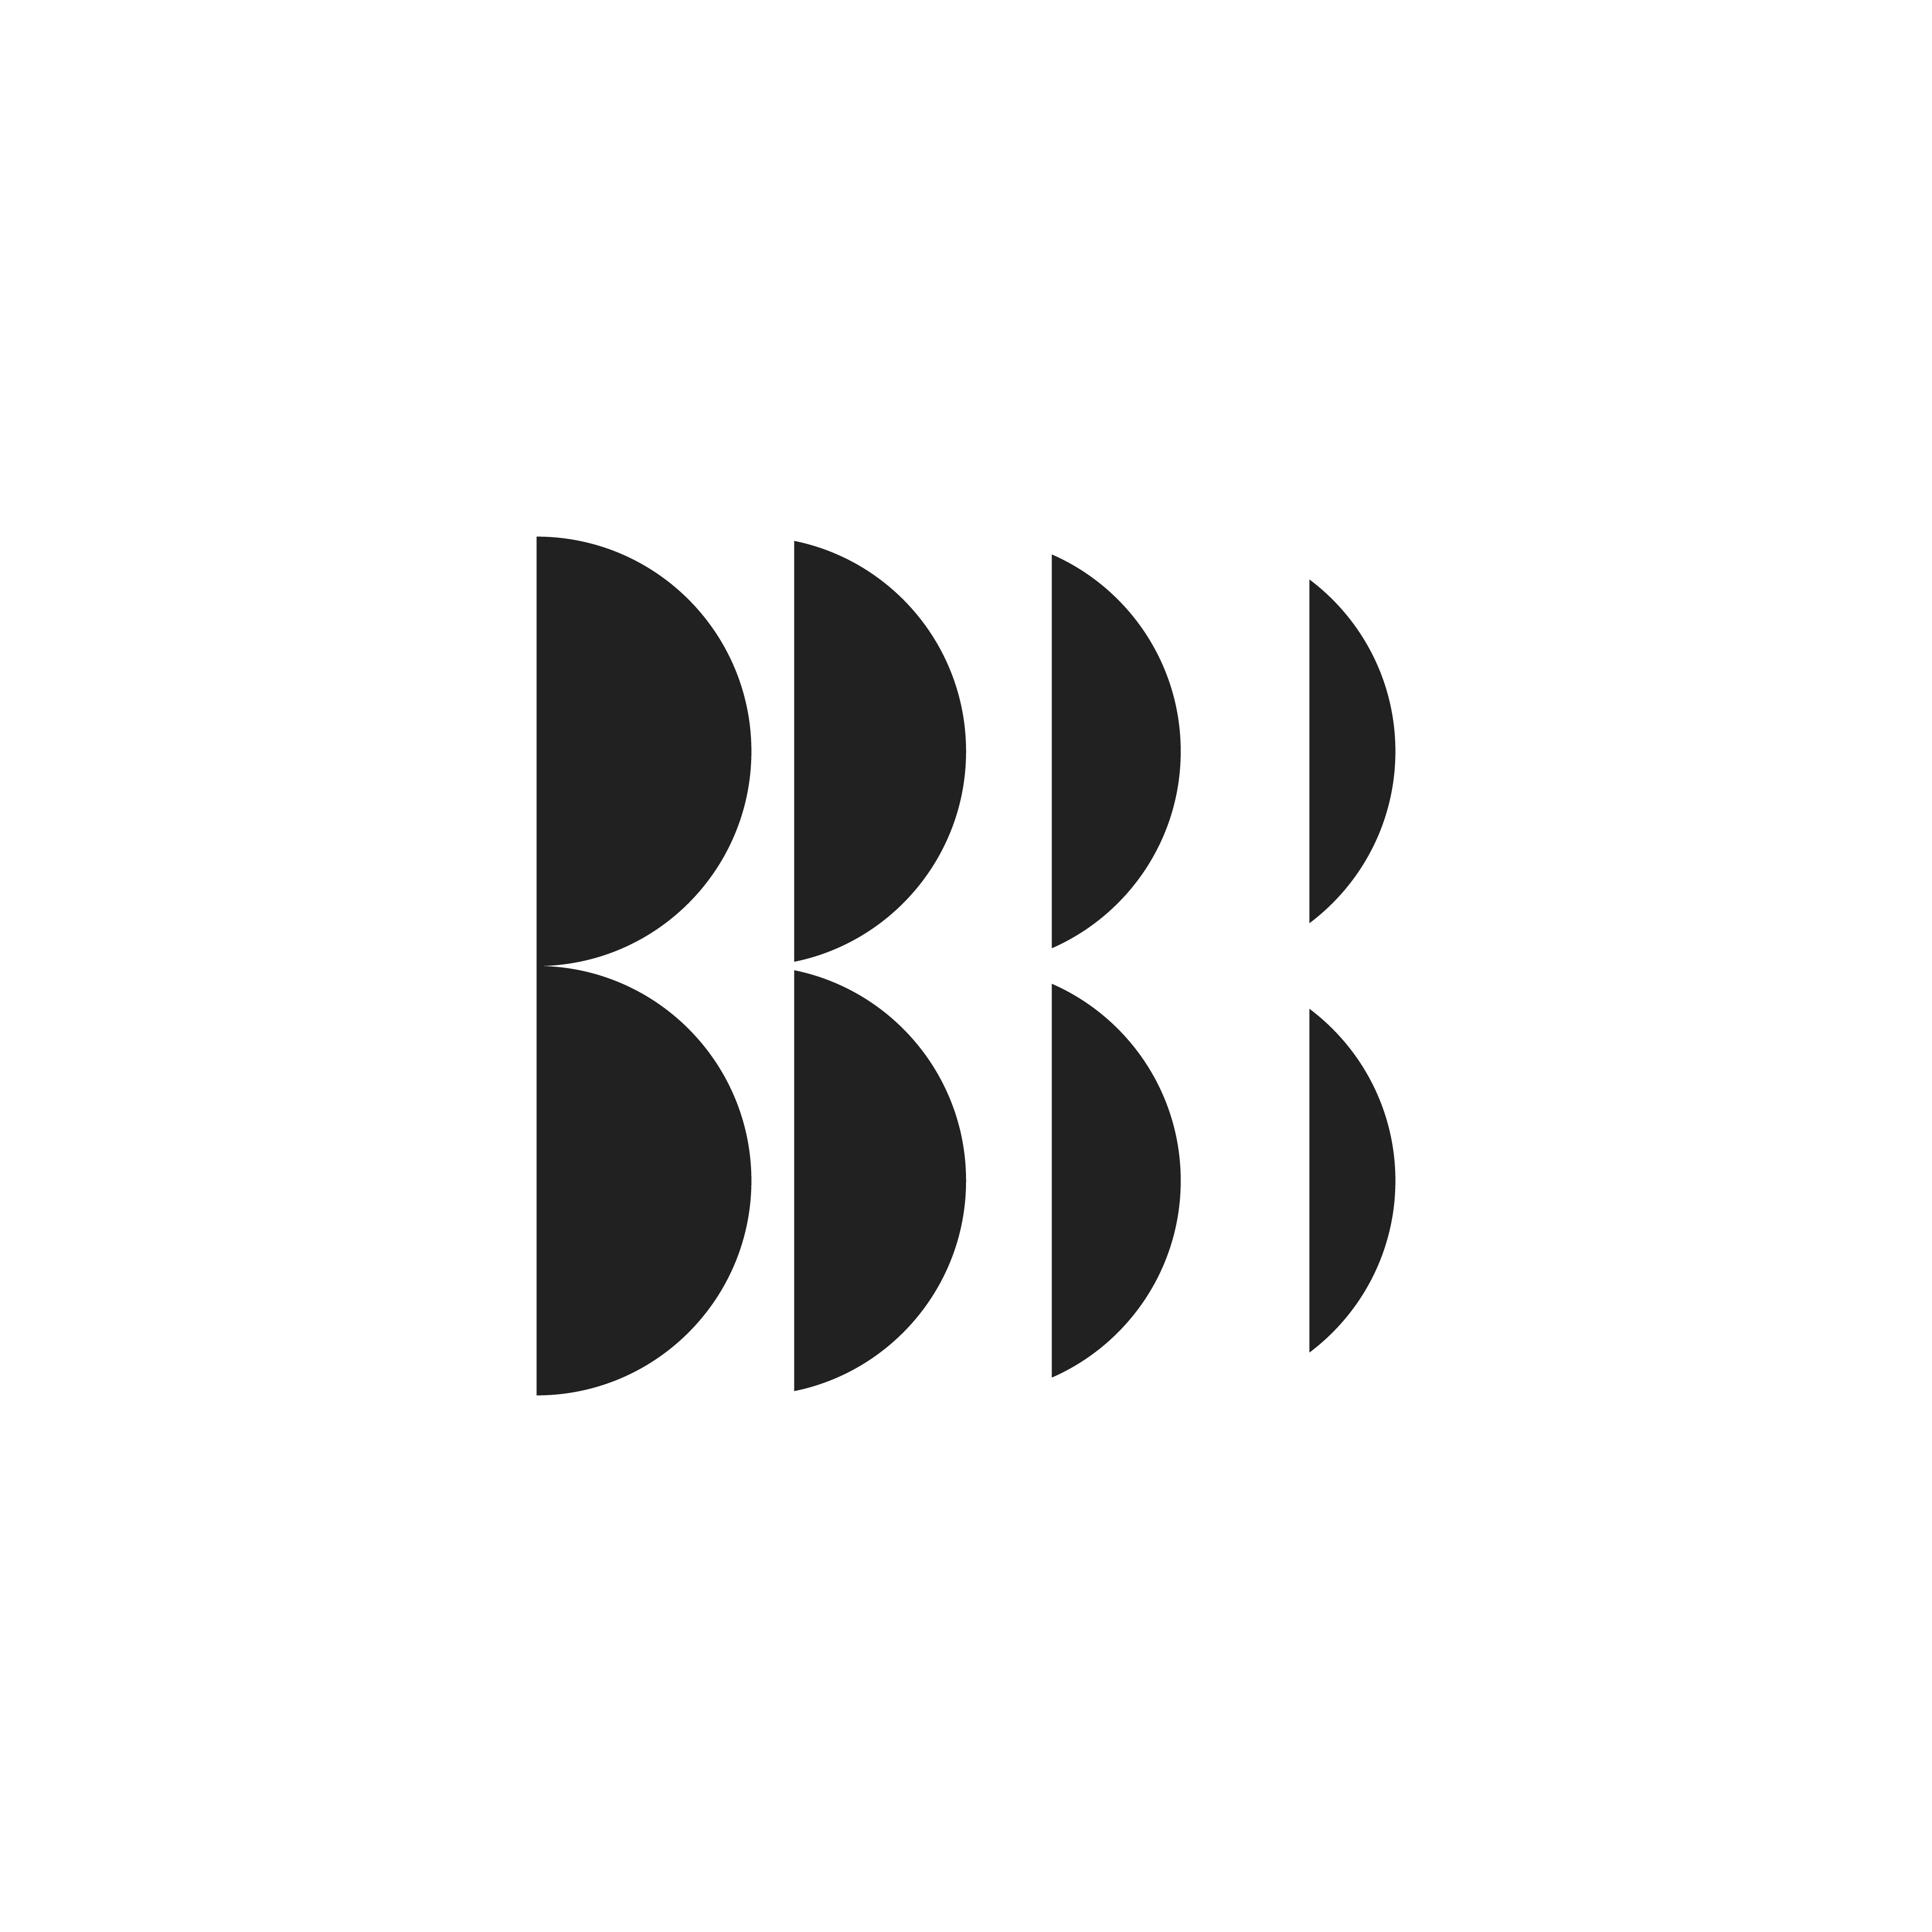 Letter B logo design by logo designer Francesco Bonetti for your inspiration and for the worlds largest logo competition